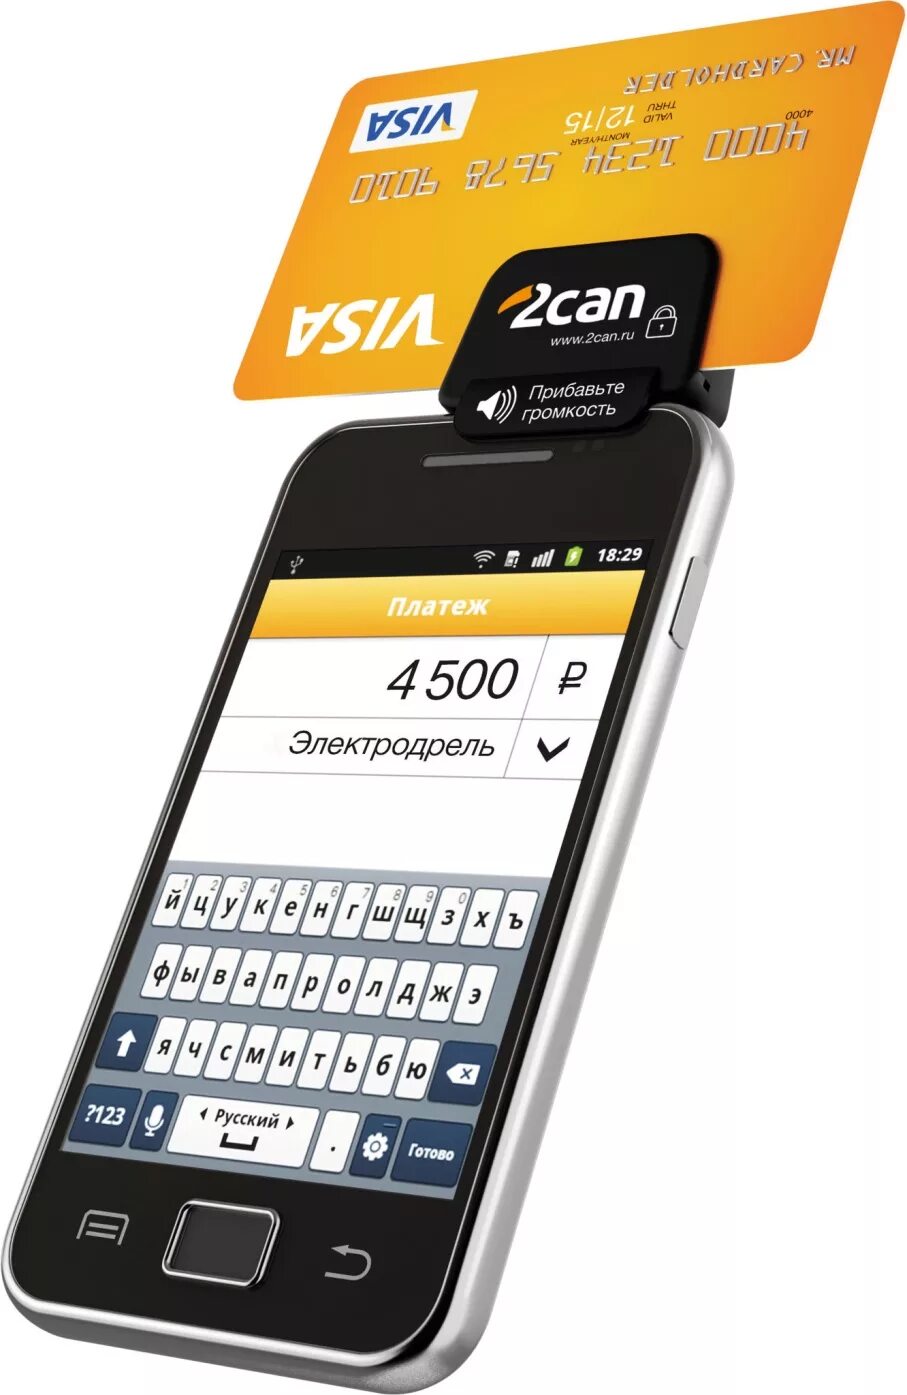 POS-терминал 2can v20. Платежный терминал 2can. Мобильный терминал эквайринга. 2can терминал. Платежный терминал в телефоне